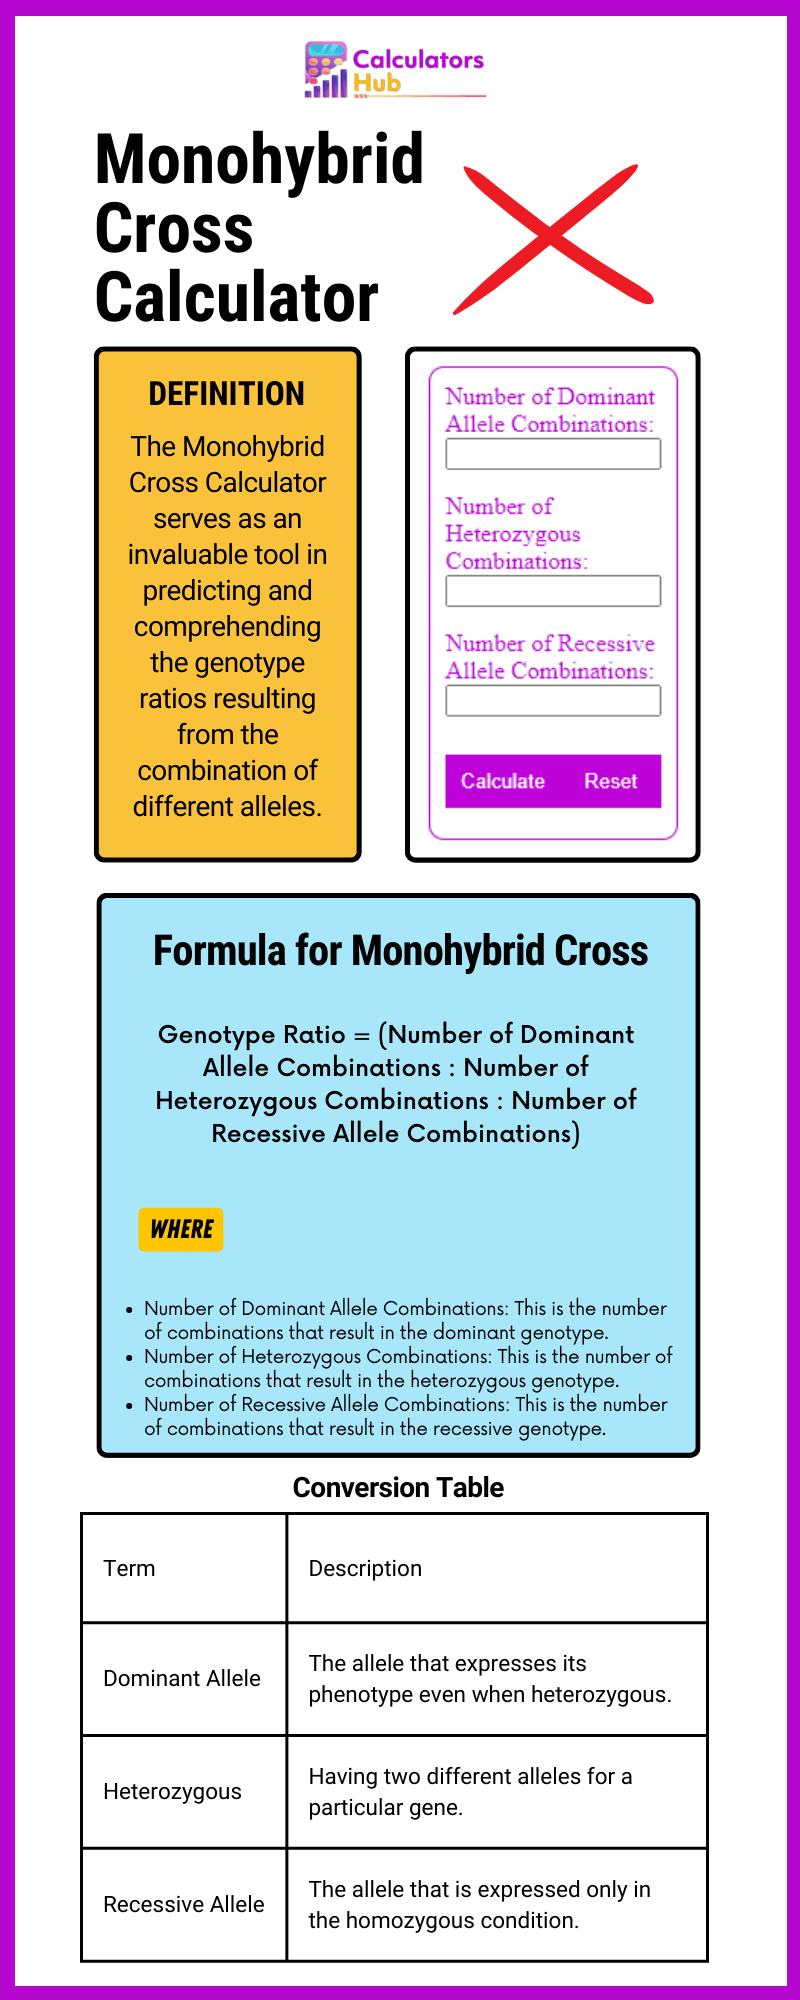 Monohybrid Cross Calculator